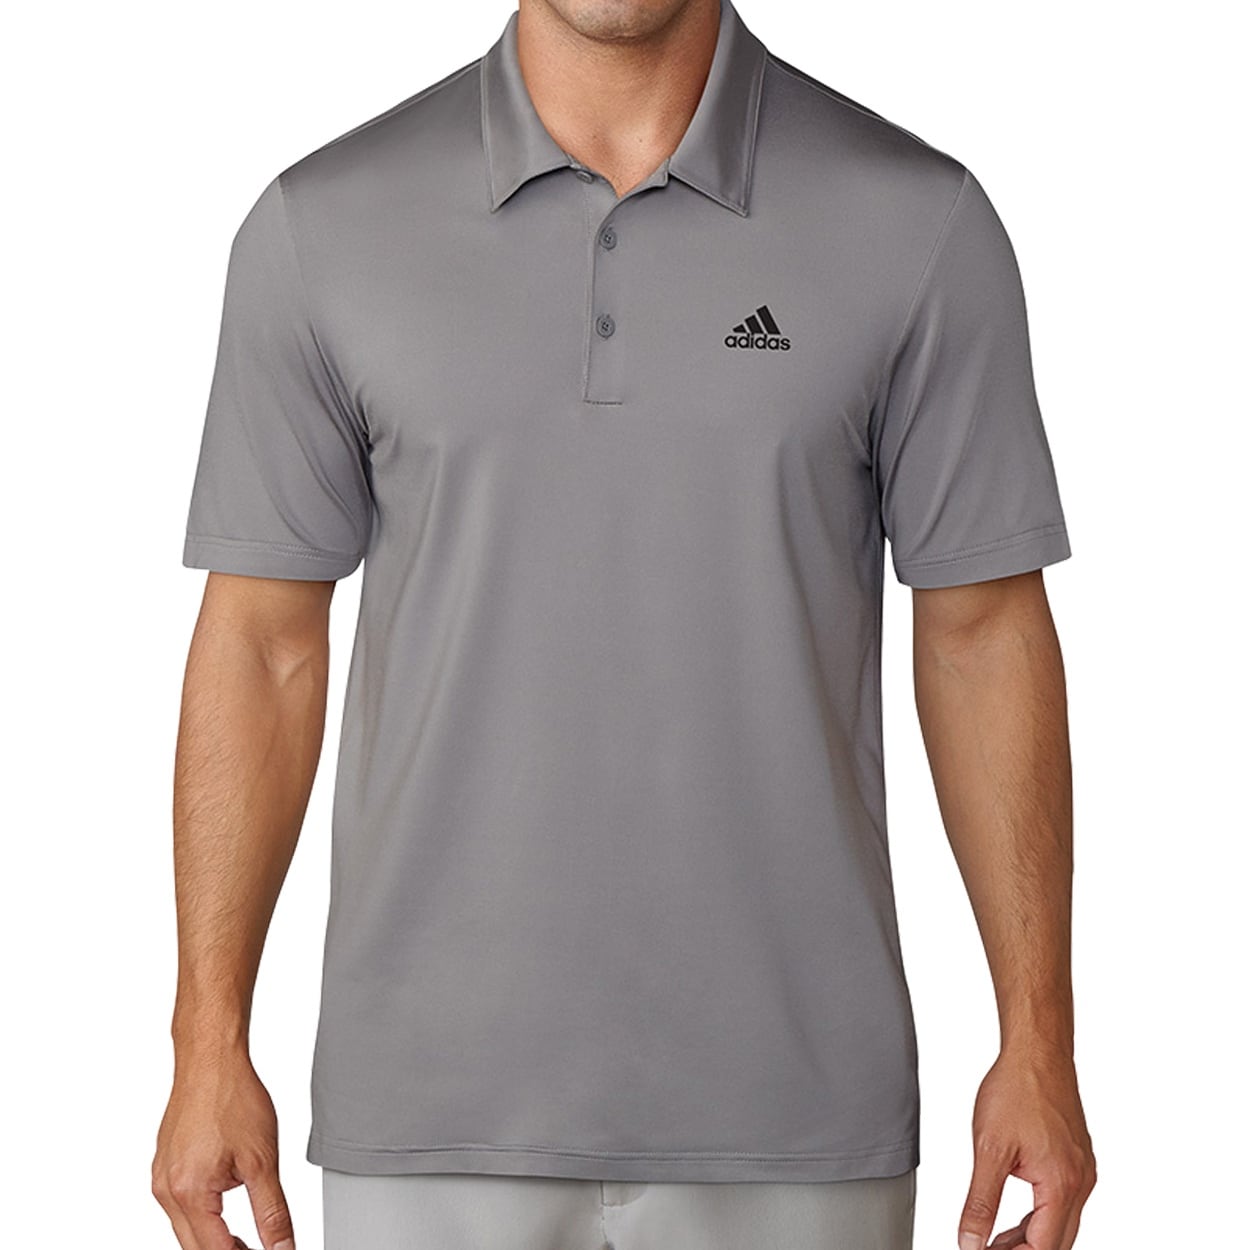 Adidas Golf Men's Solid Shirt - Overstock - 28370757